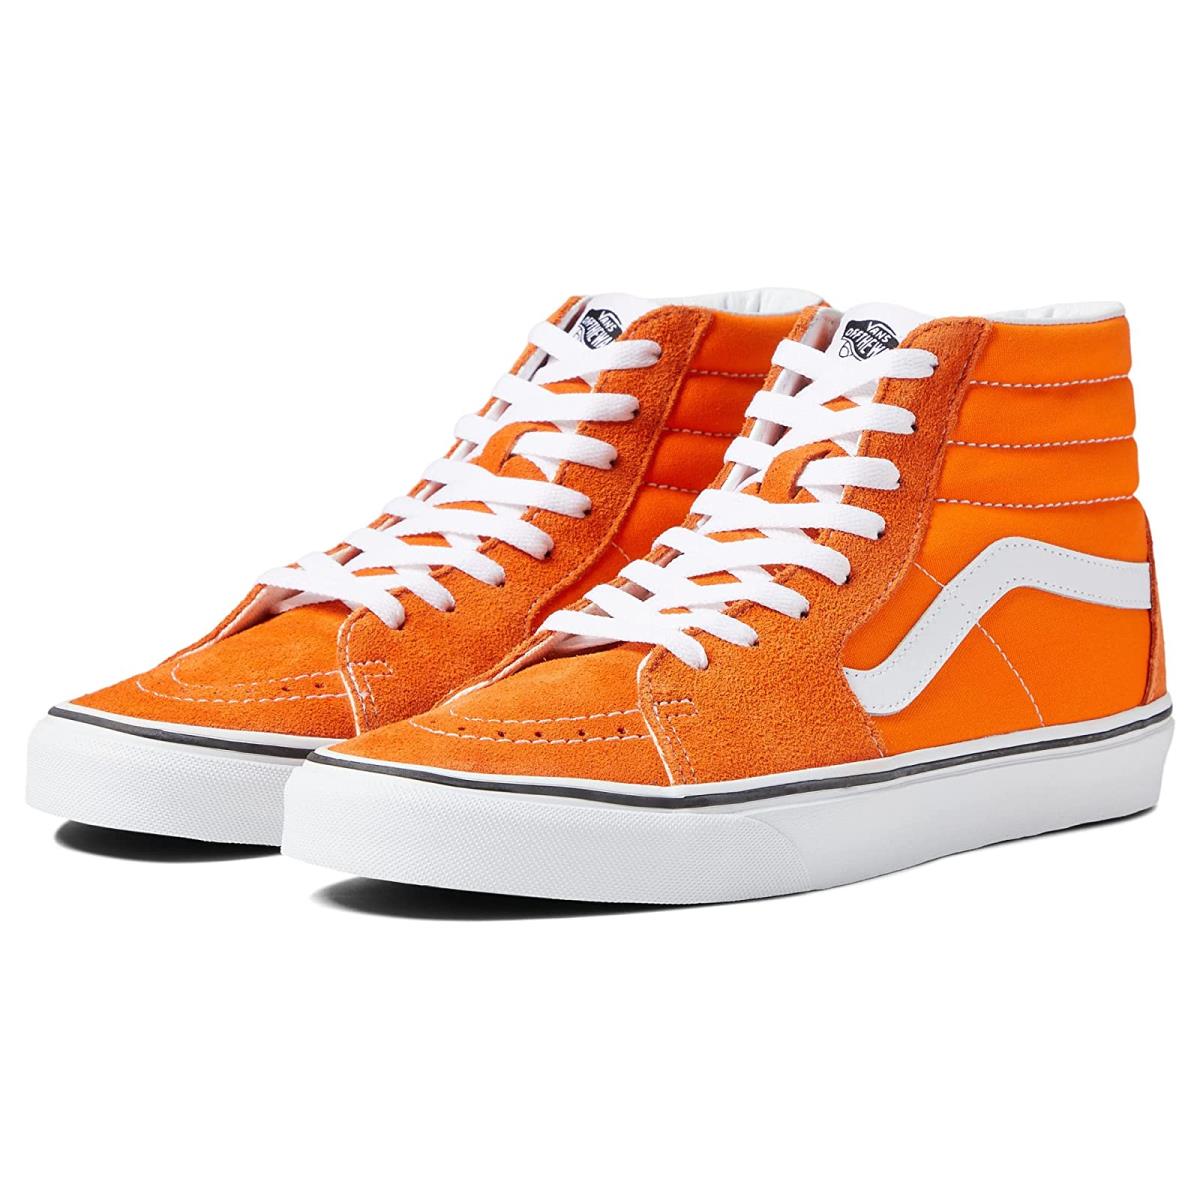 Unisex Sneakers Athletic Shoes Vans SK8-Hi Orange Tiger/True White